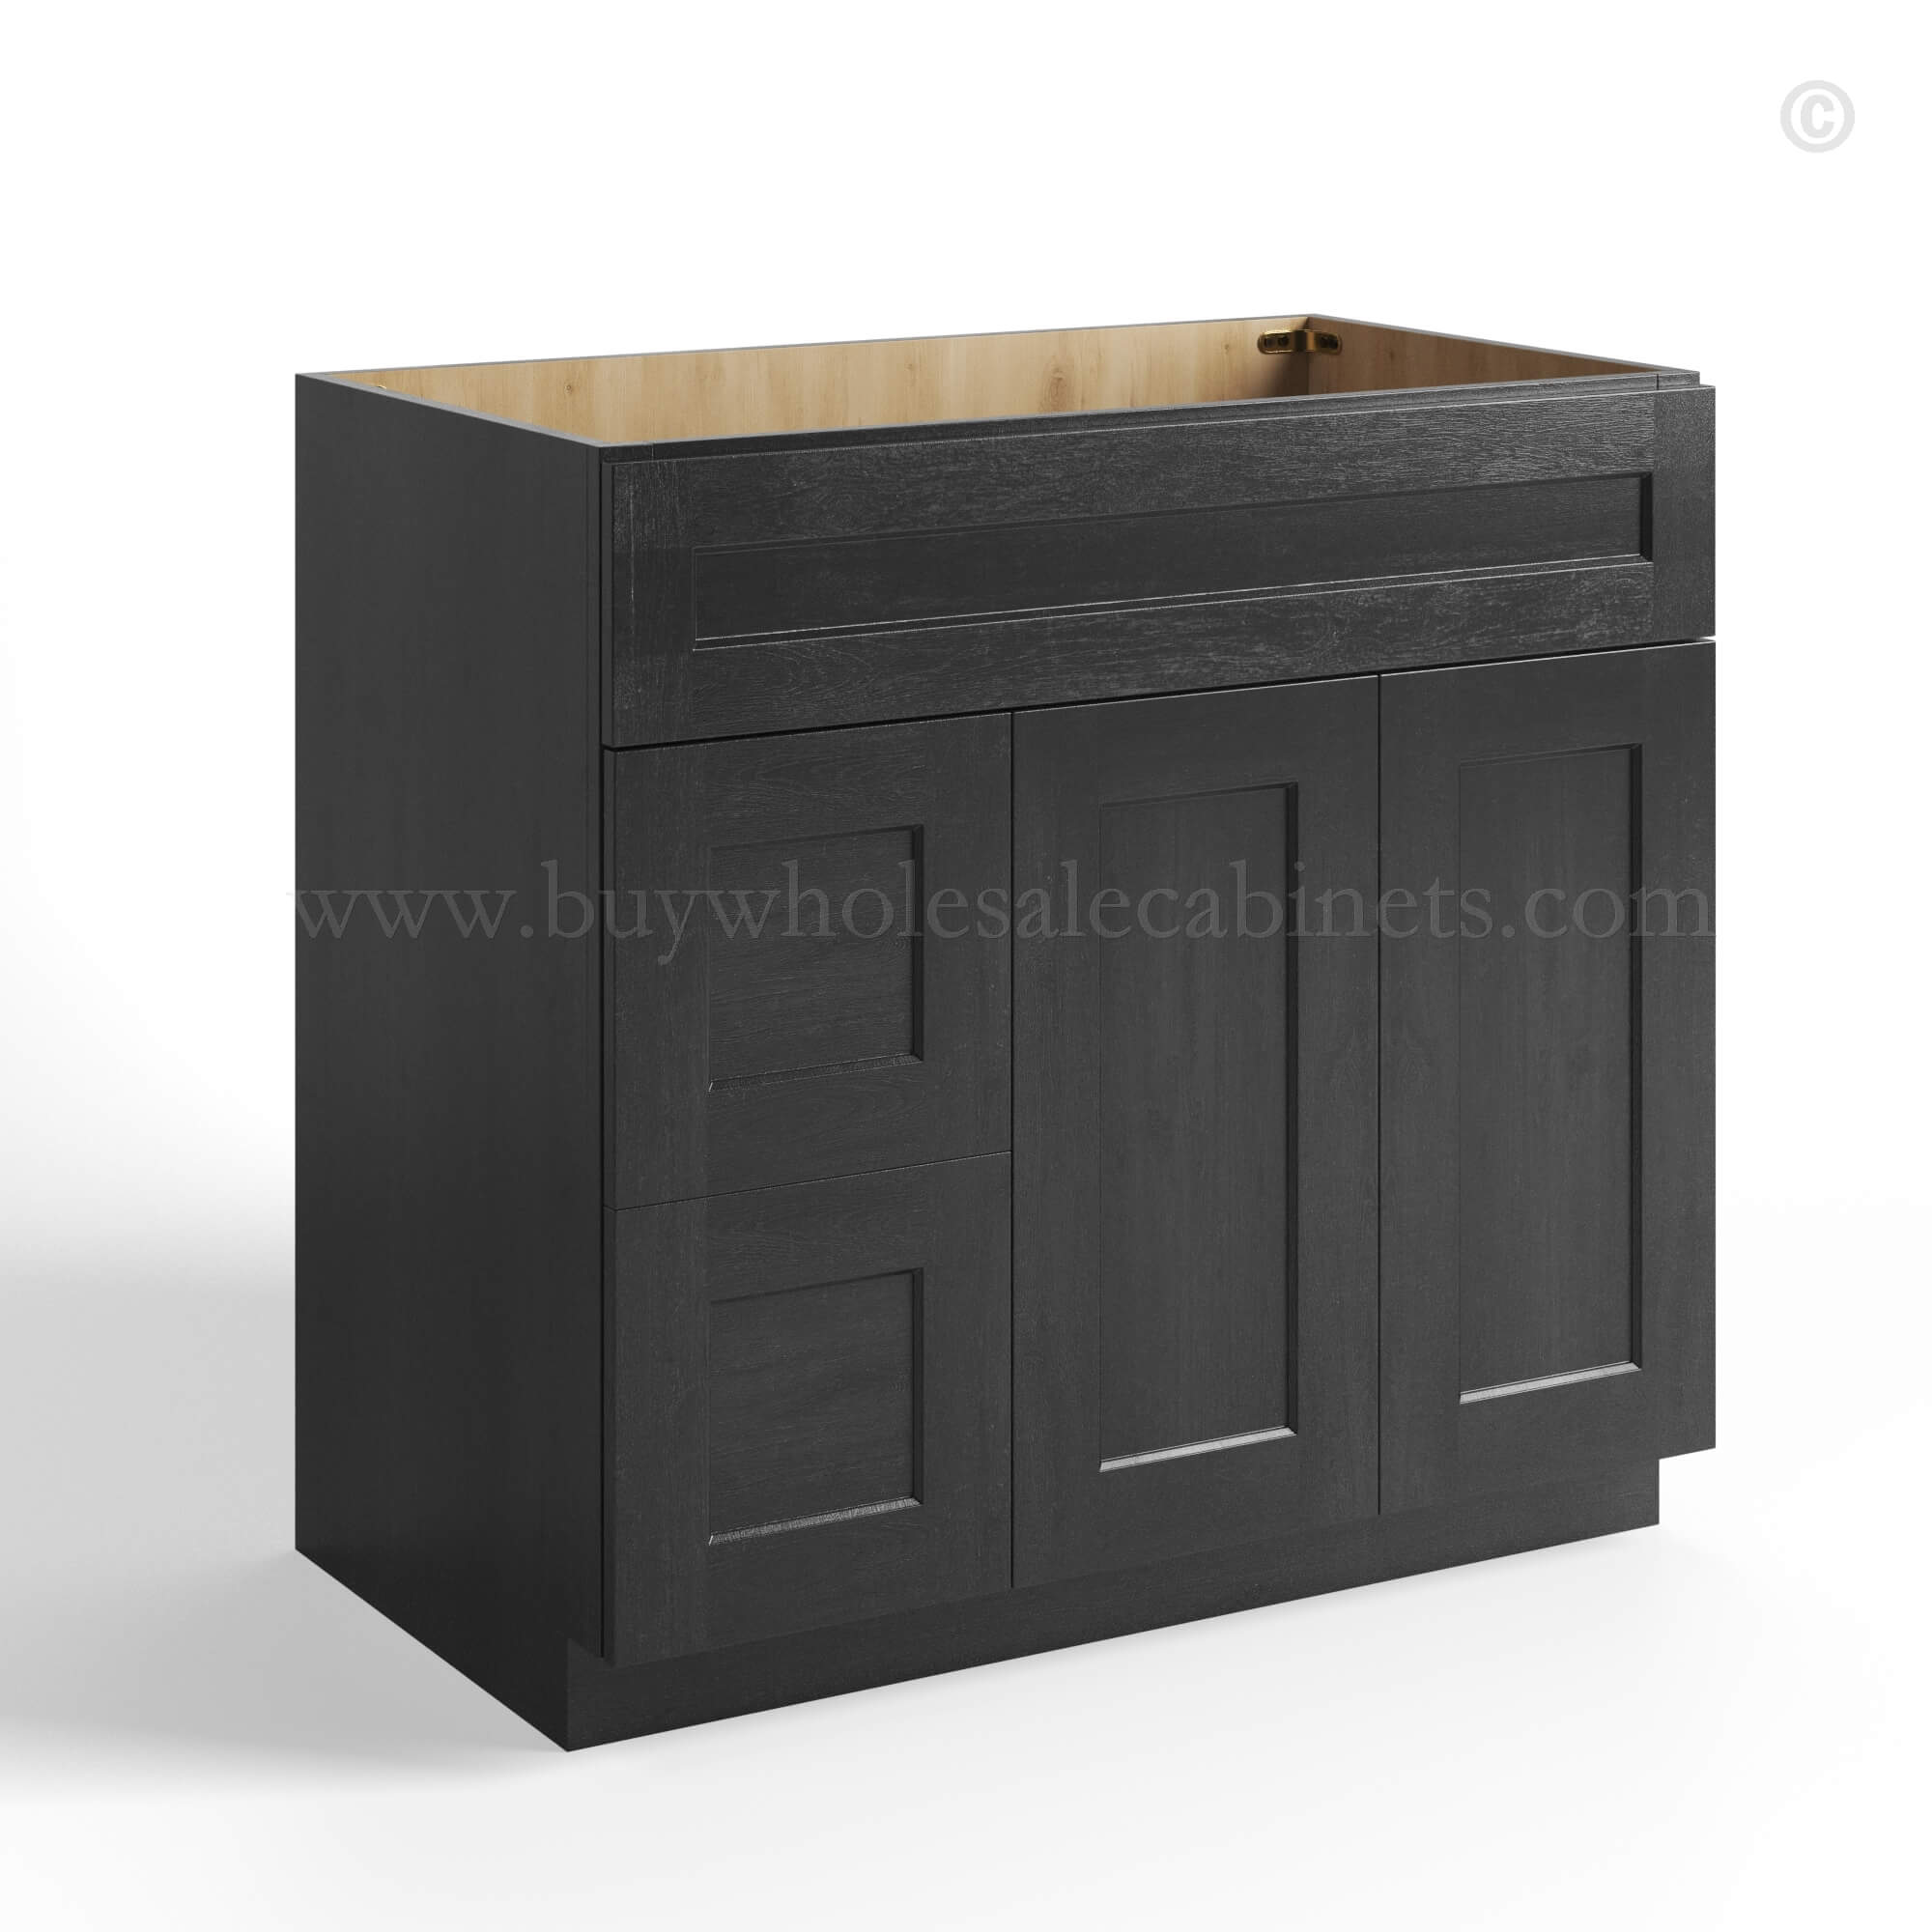 Charcoal Black Shaker Vanity Sink Base Combo 36W, rta cabinets, wholesale cabinets